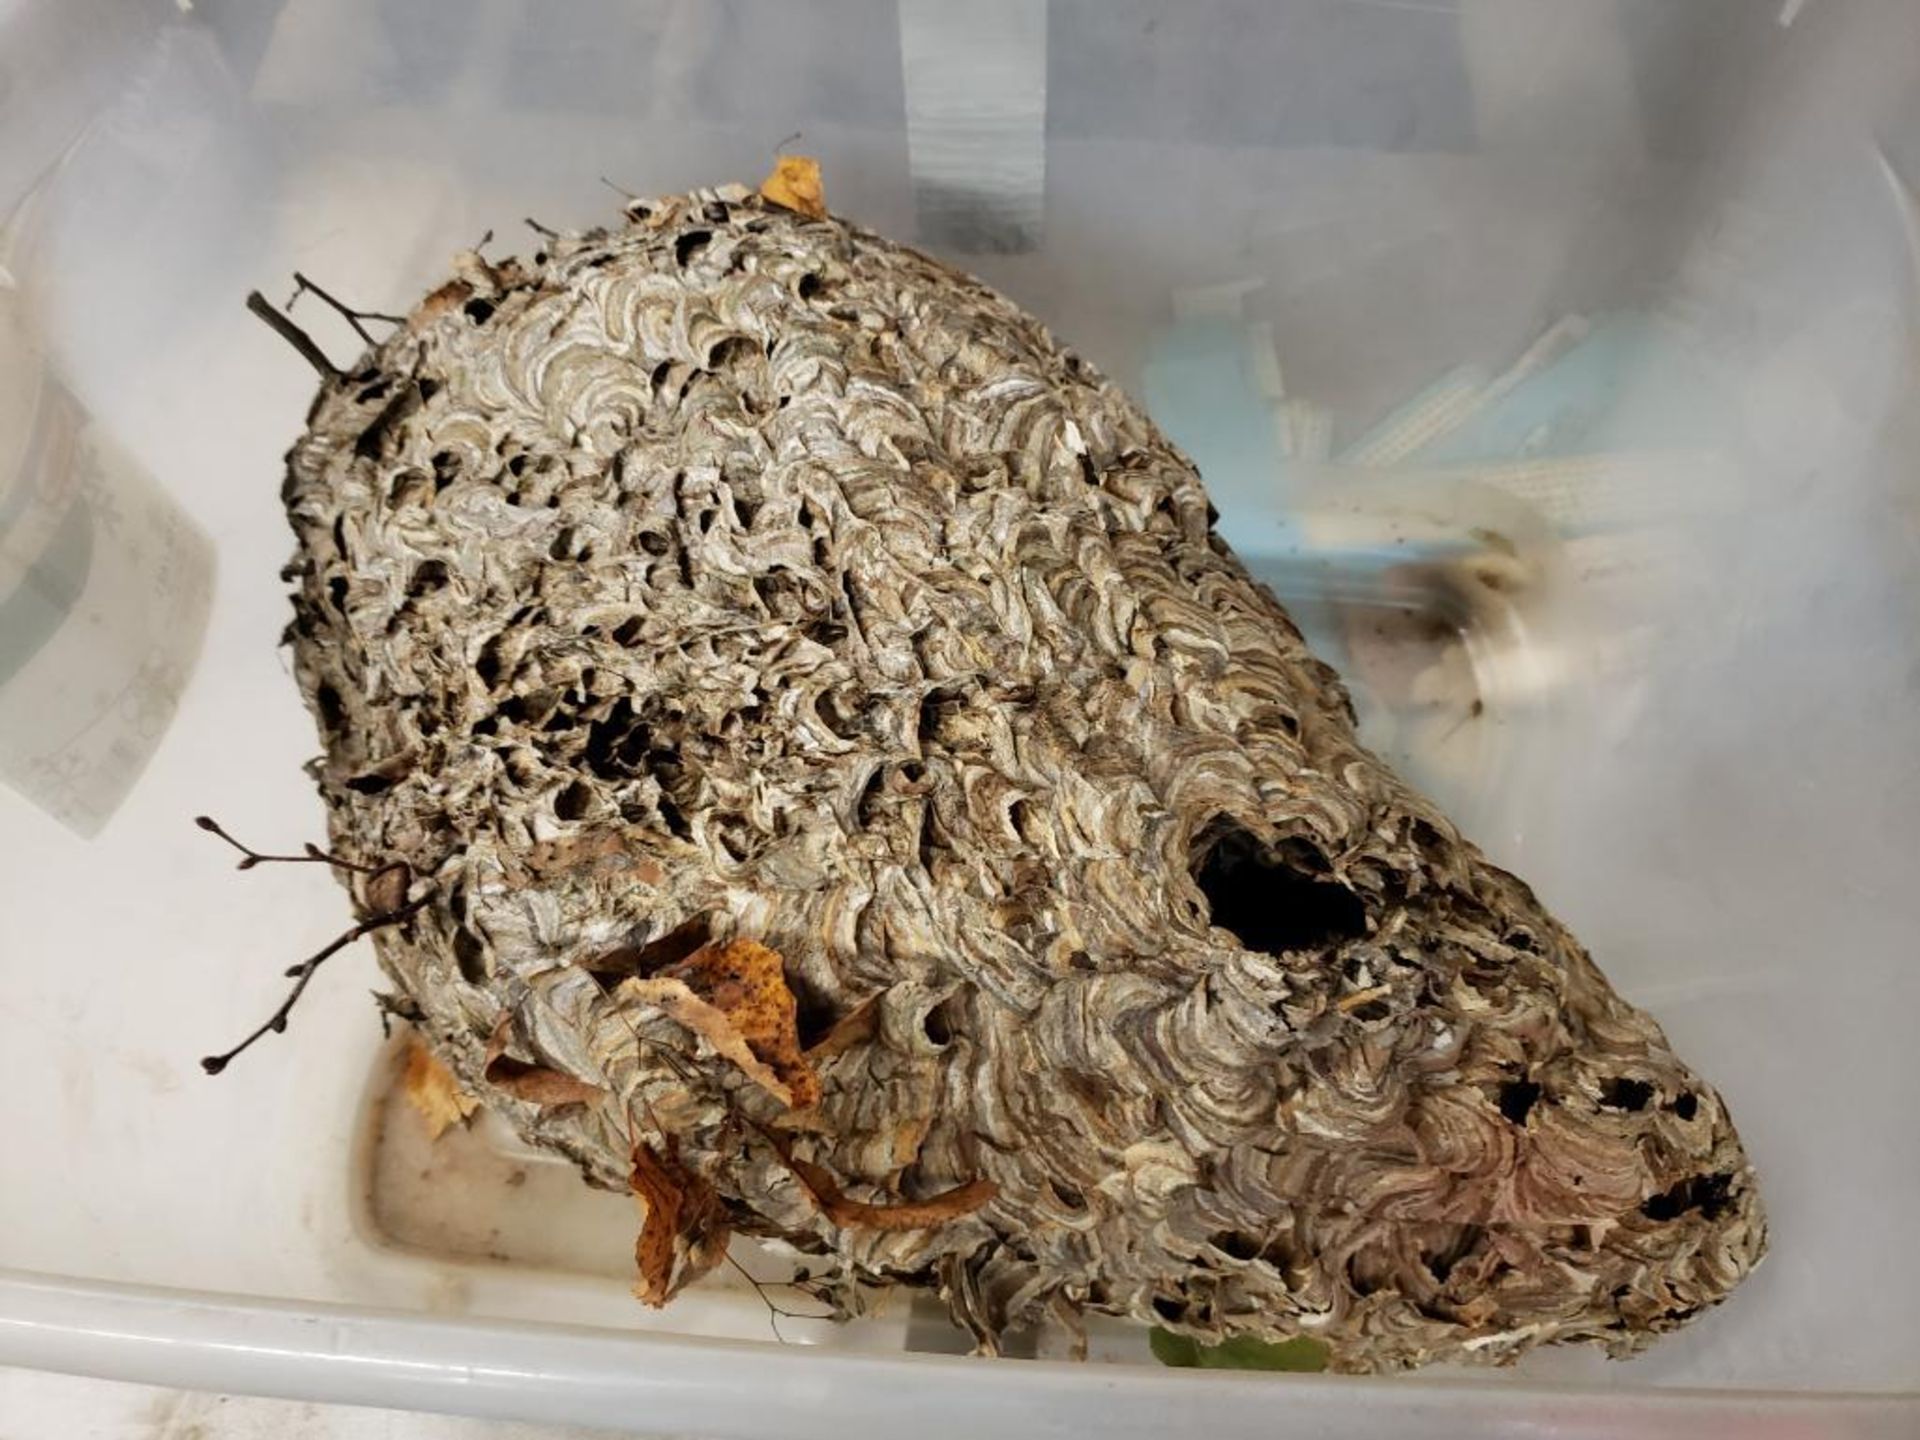 Wasps nest.